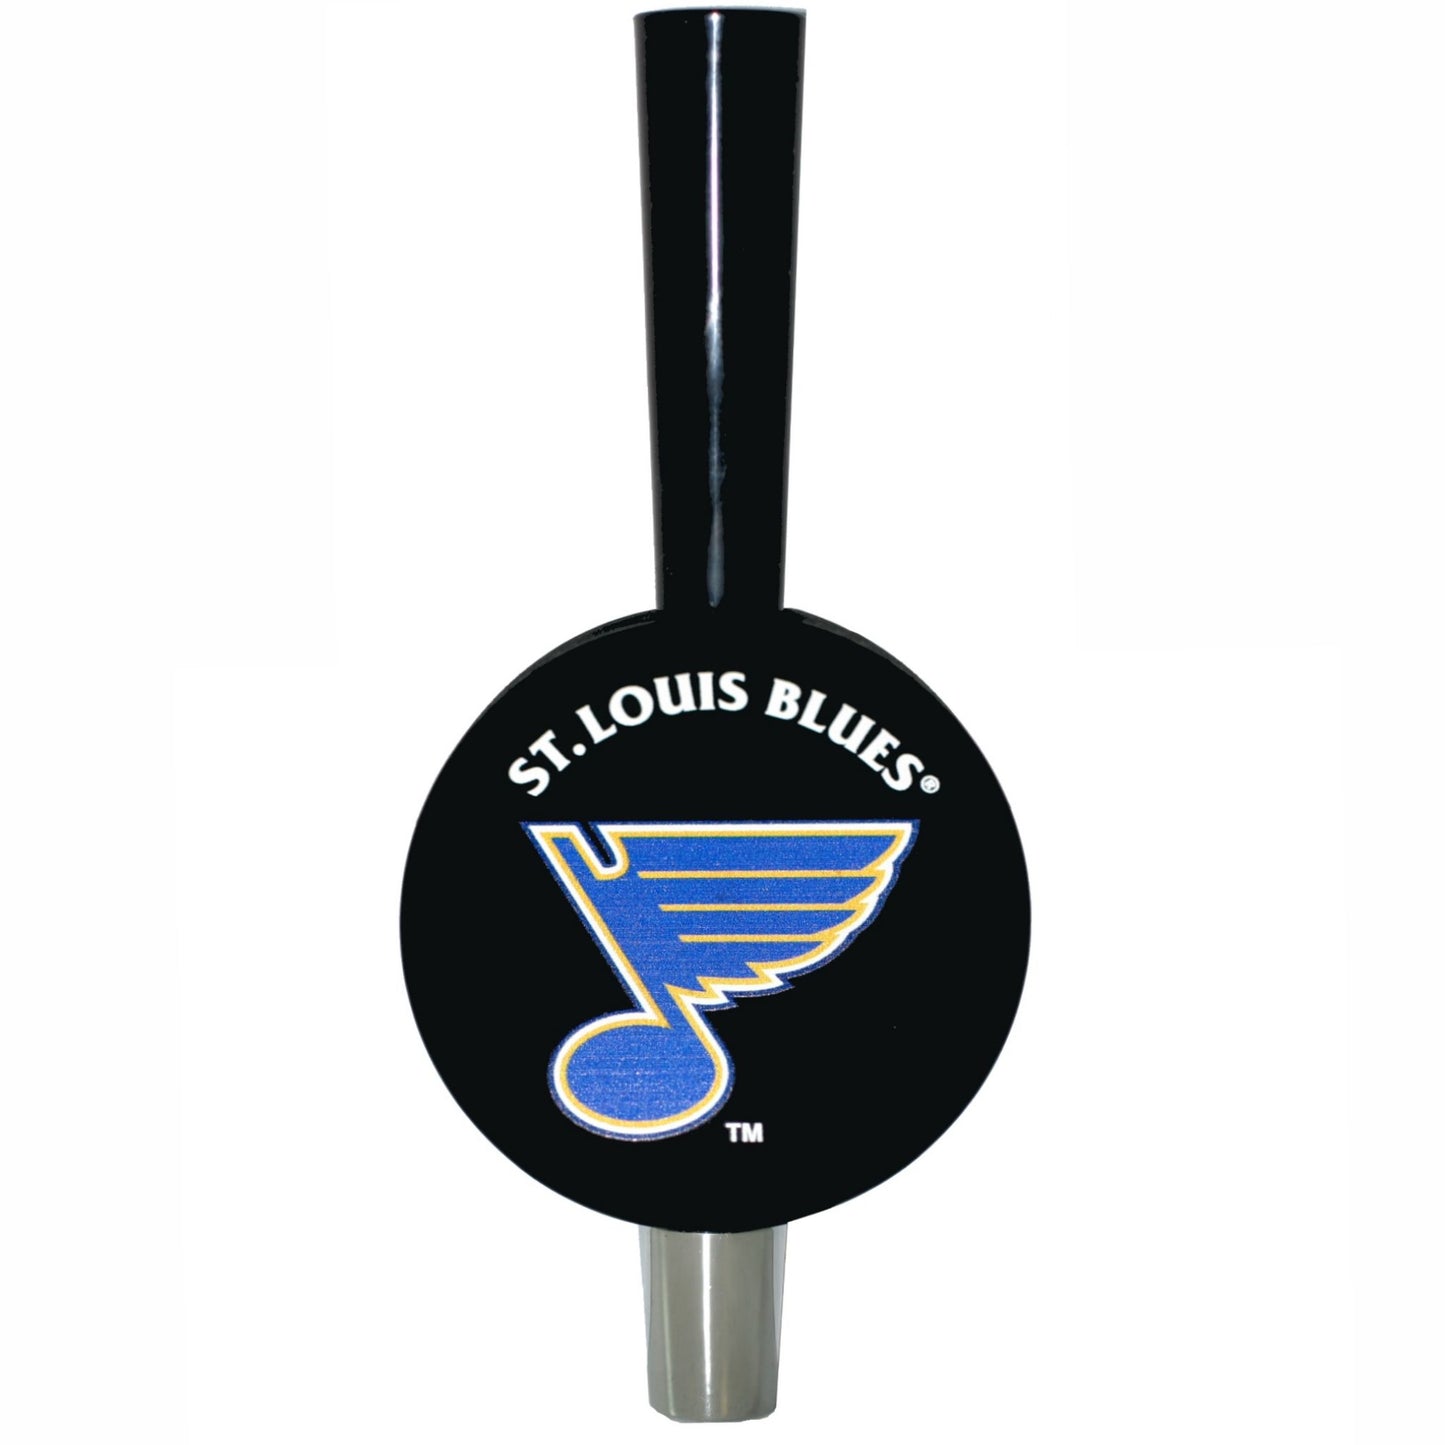 St. Louis Blues Tall-Boy Hockey Puck Beer Tap Handle